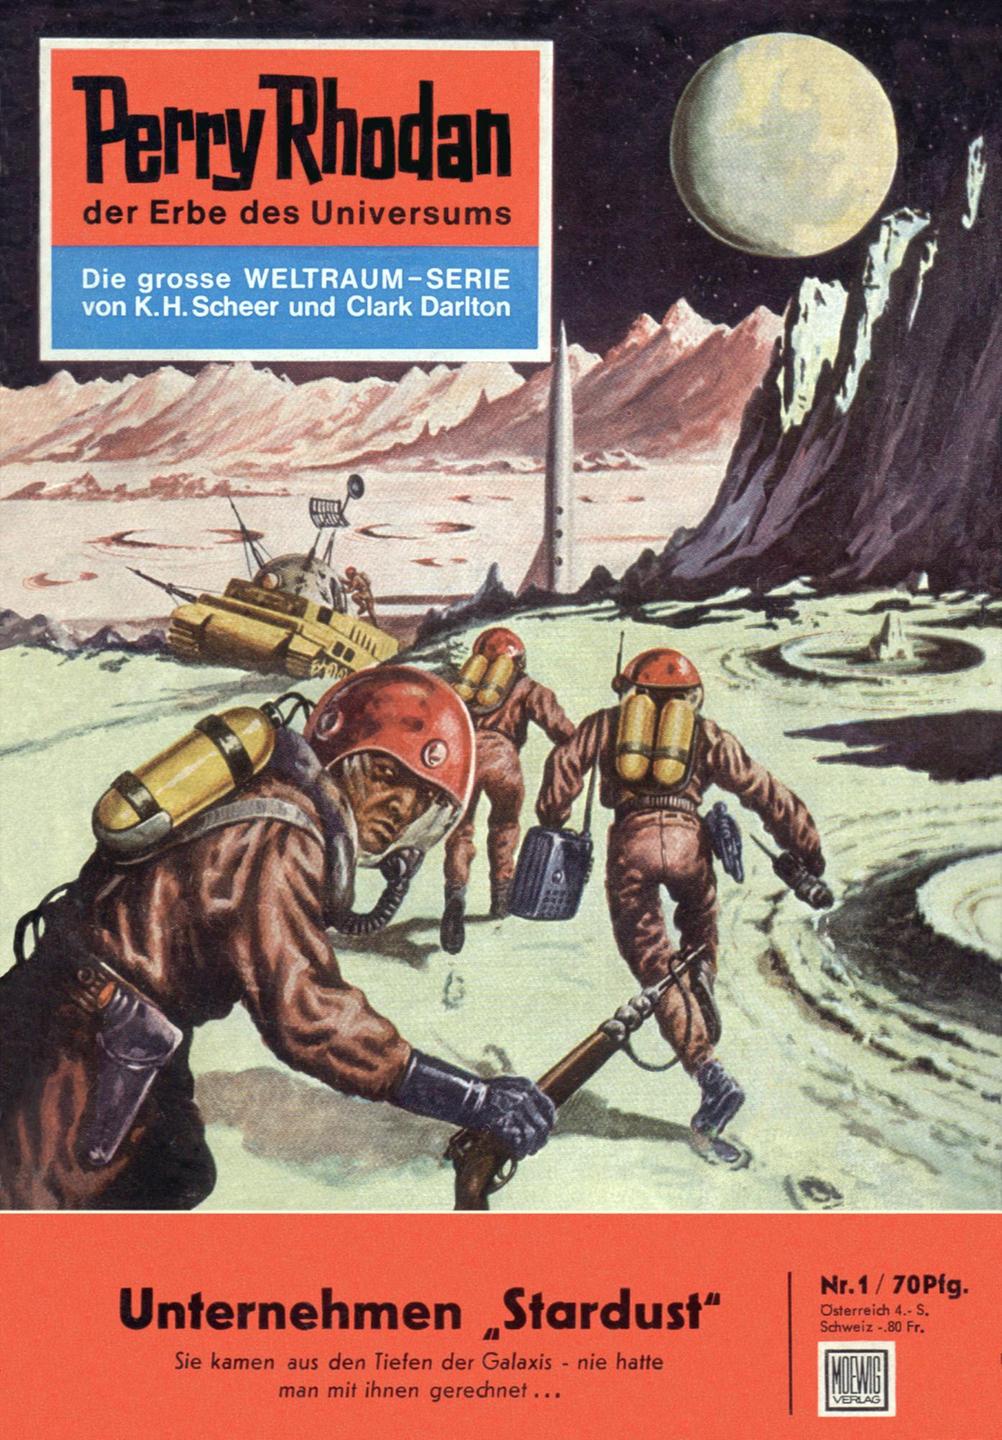 Das erste Cover der Perry Rhodan-Reihe.